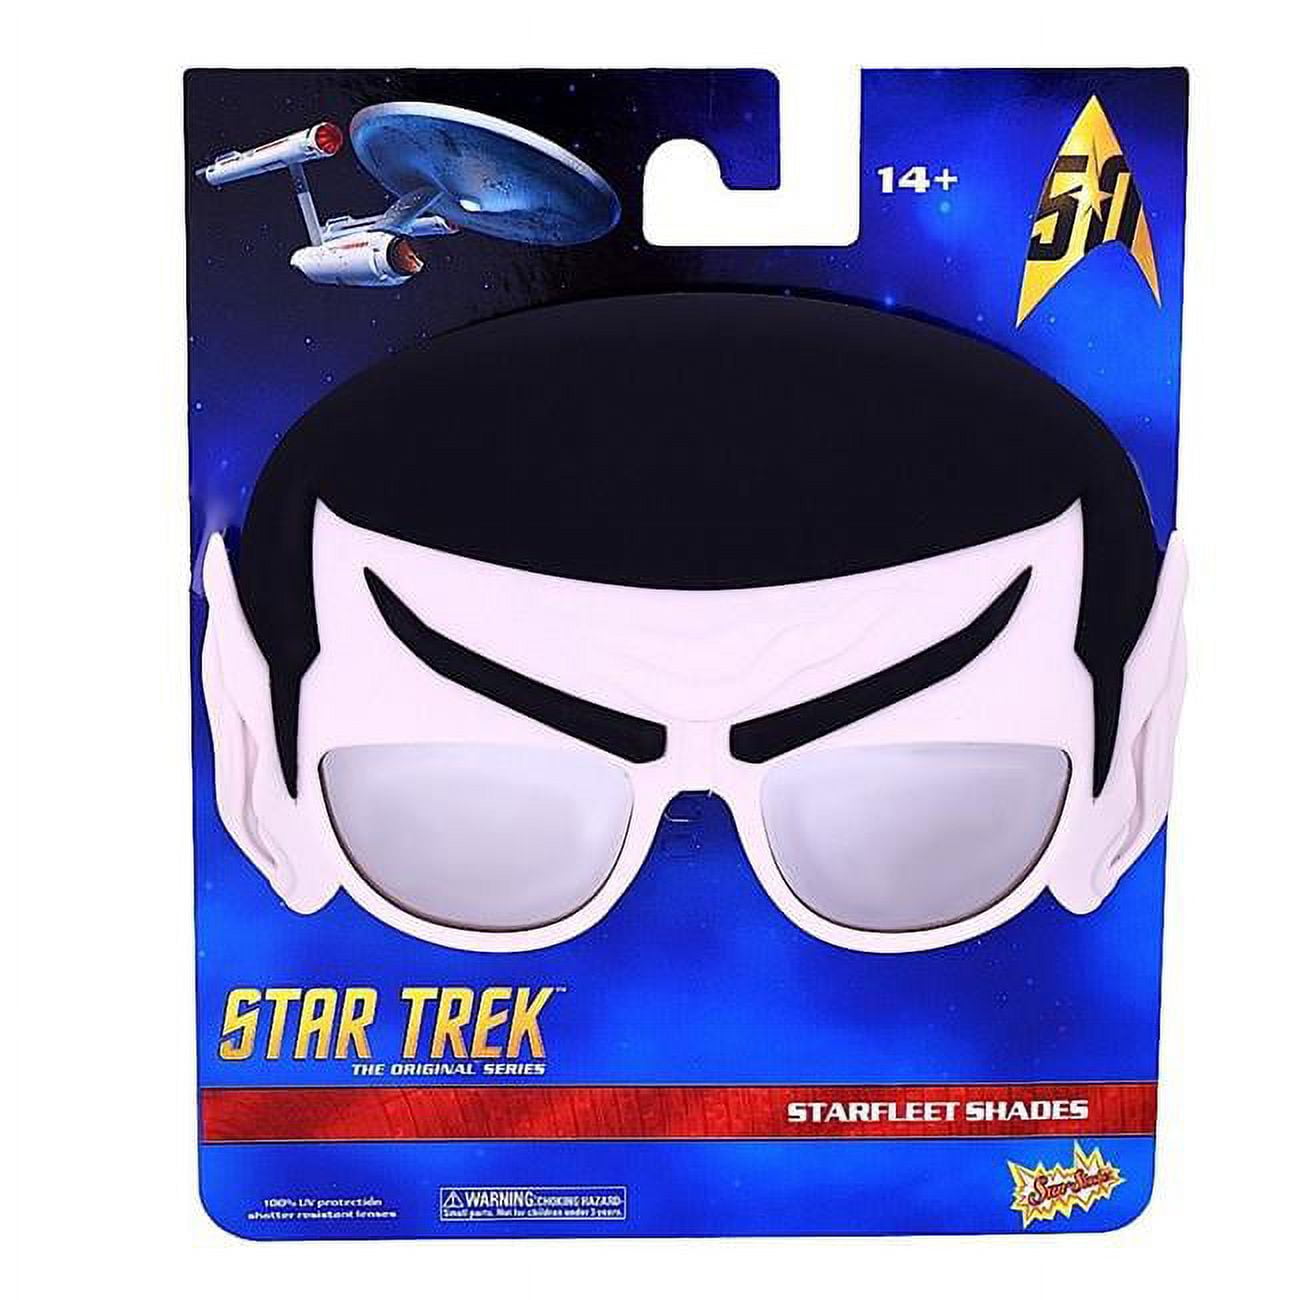 Star Trek Sunglasses